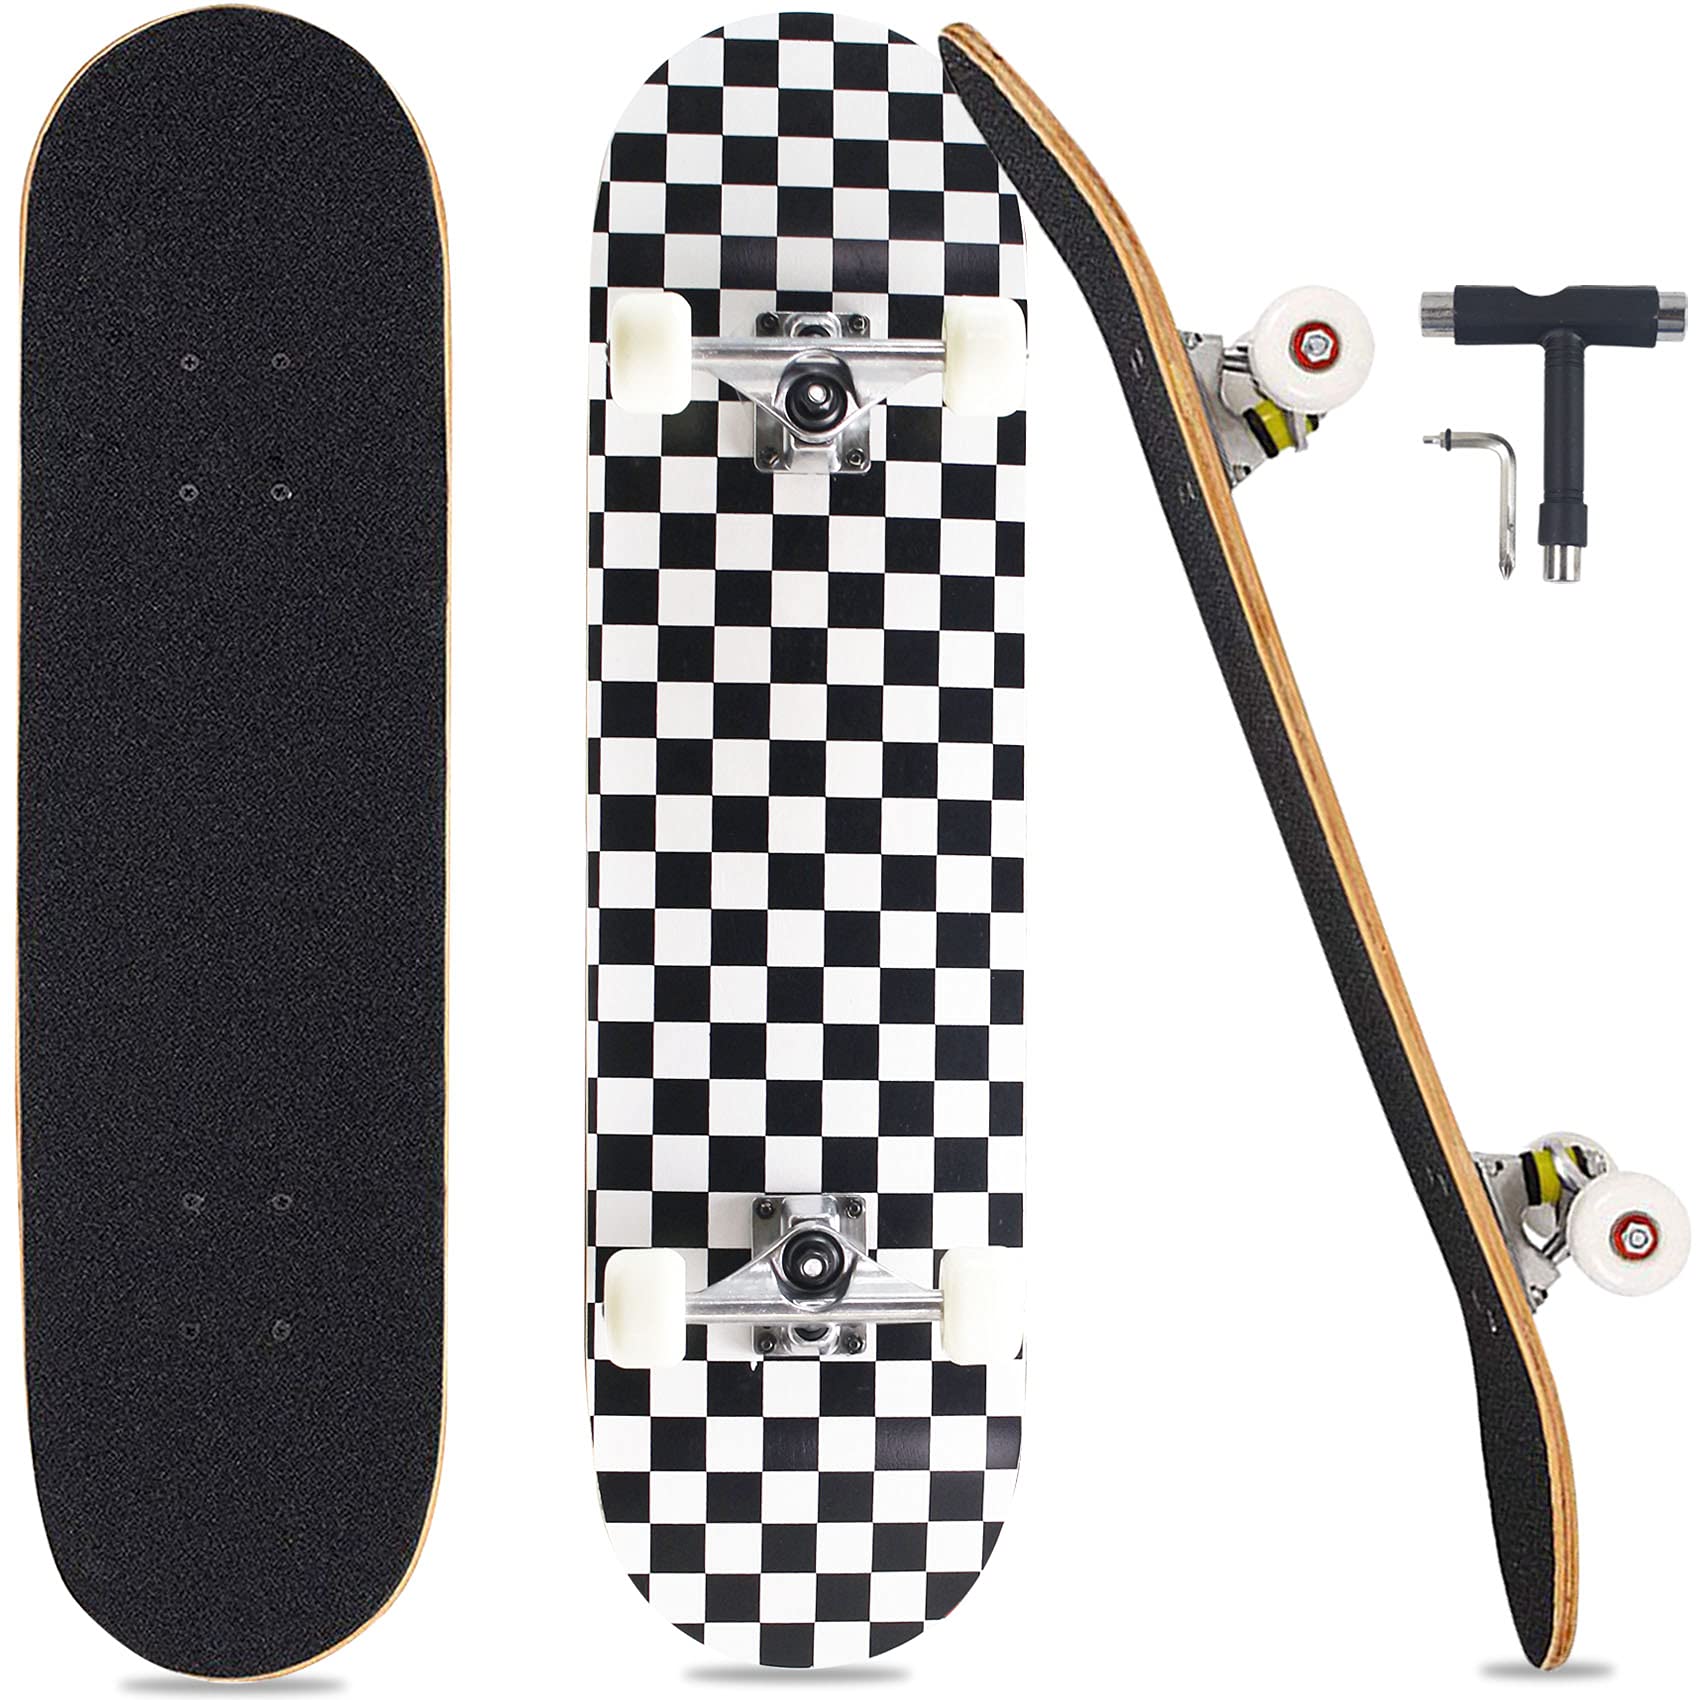 Toyship's 31"x8" Skateboards - TOYSHIP